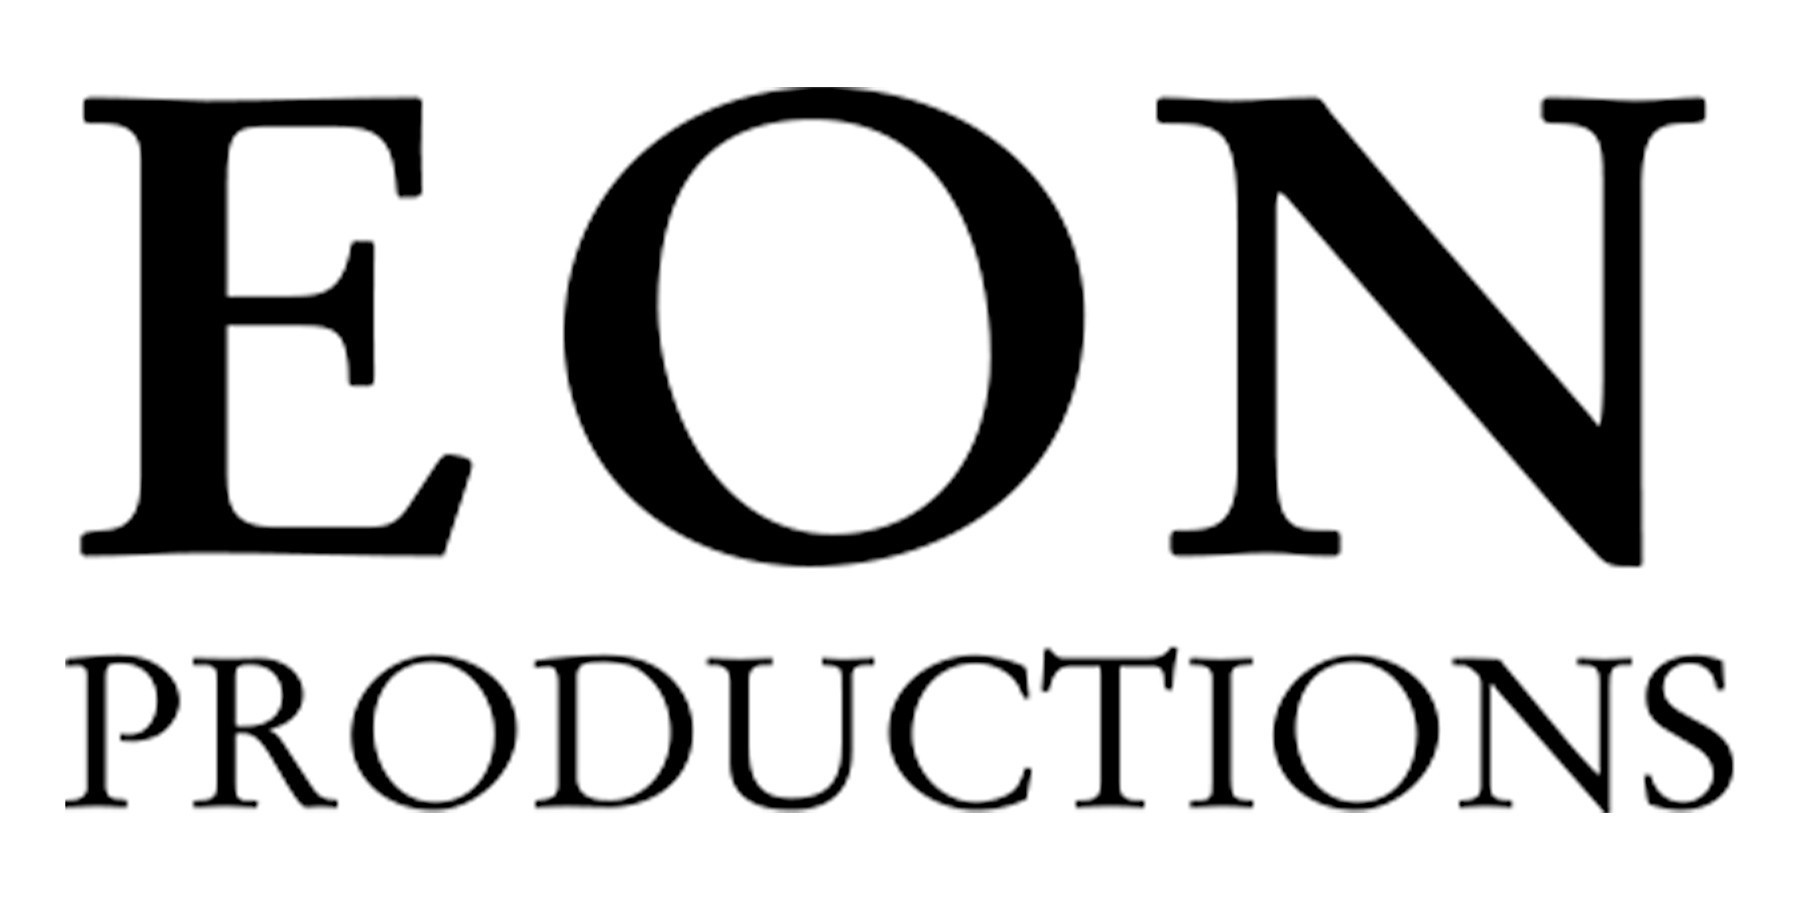 Eon Productions